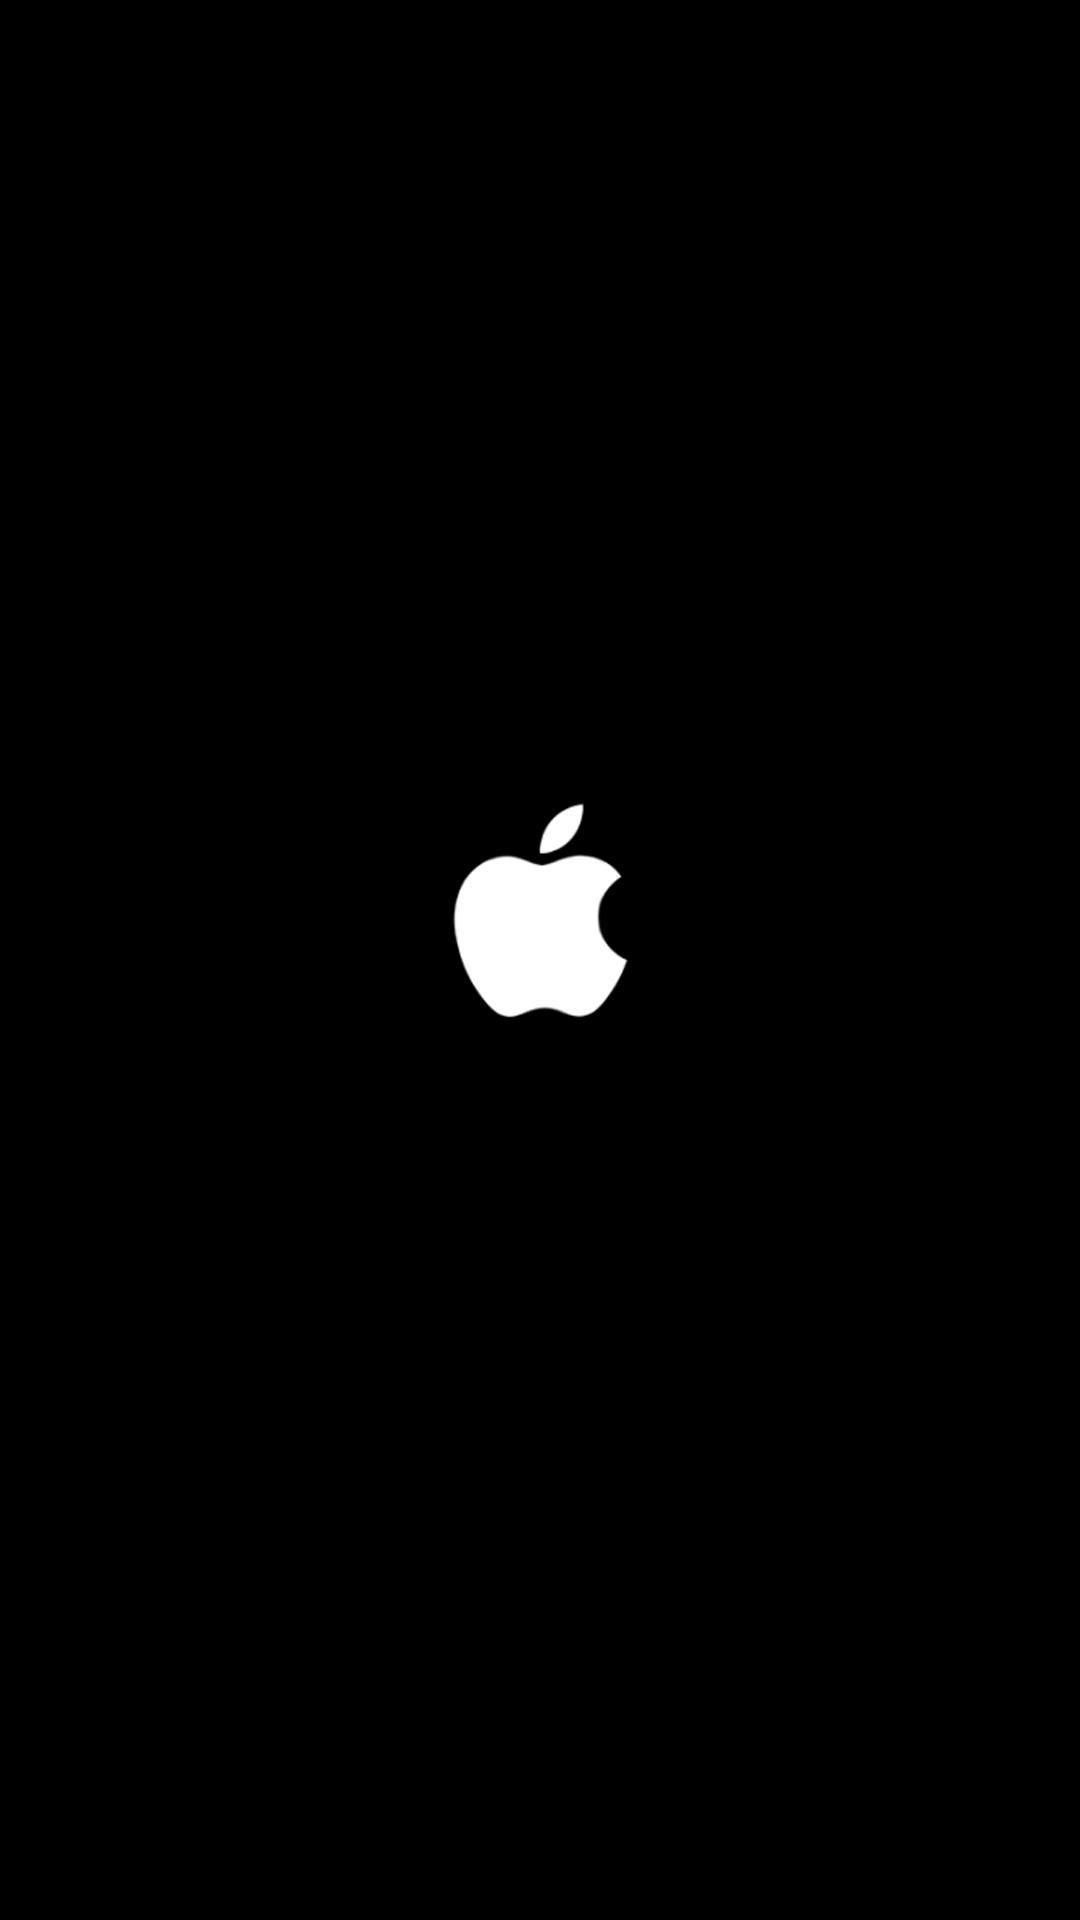 Apple's Logo Wallpaper Free Apple's Logo Background